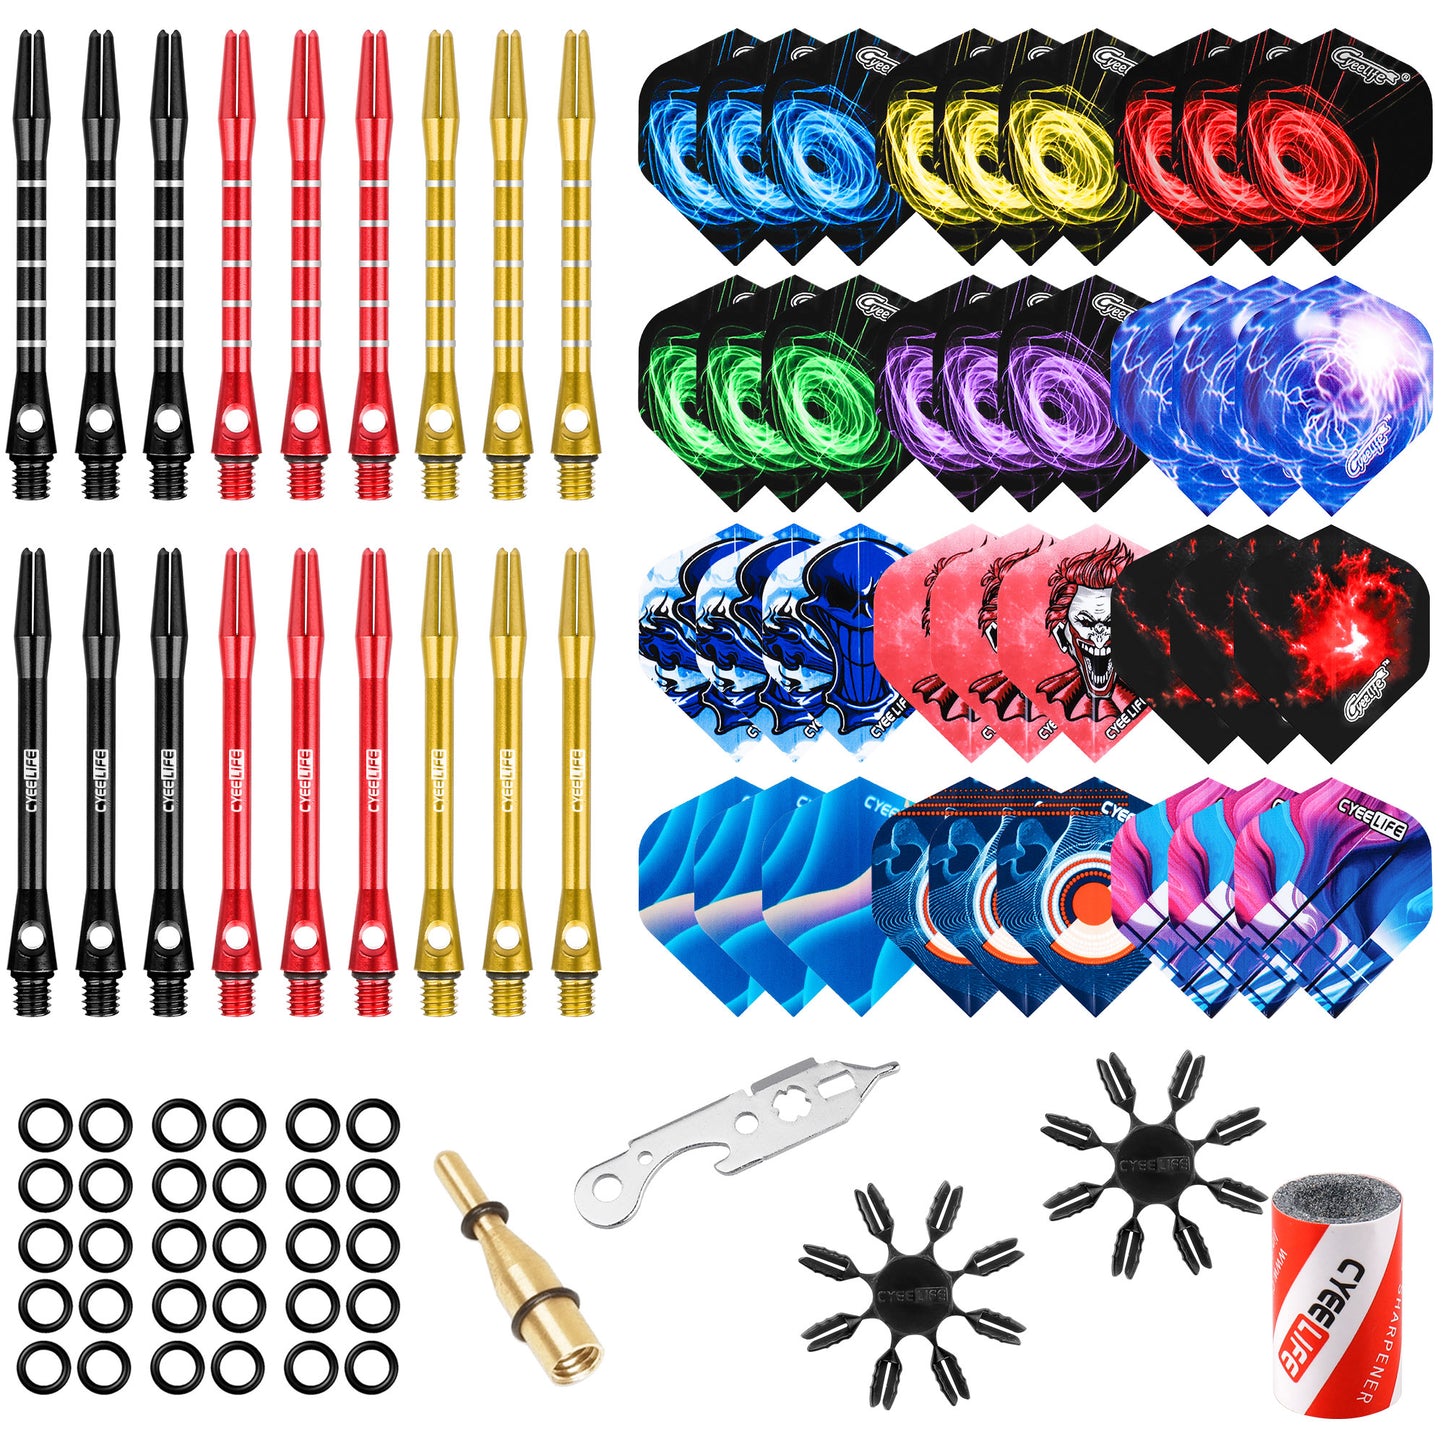 Dart Accessories kit,36 Dart Flights+18 Aluminum Shafts+Sharpener+Dart Tool+100 Rubber Rings+9 Flight Protectors